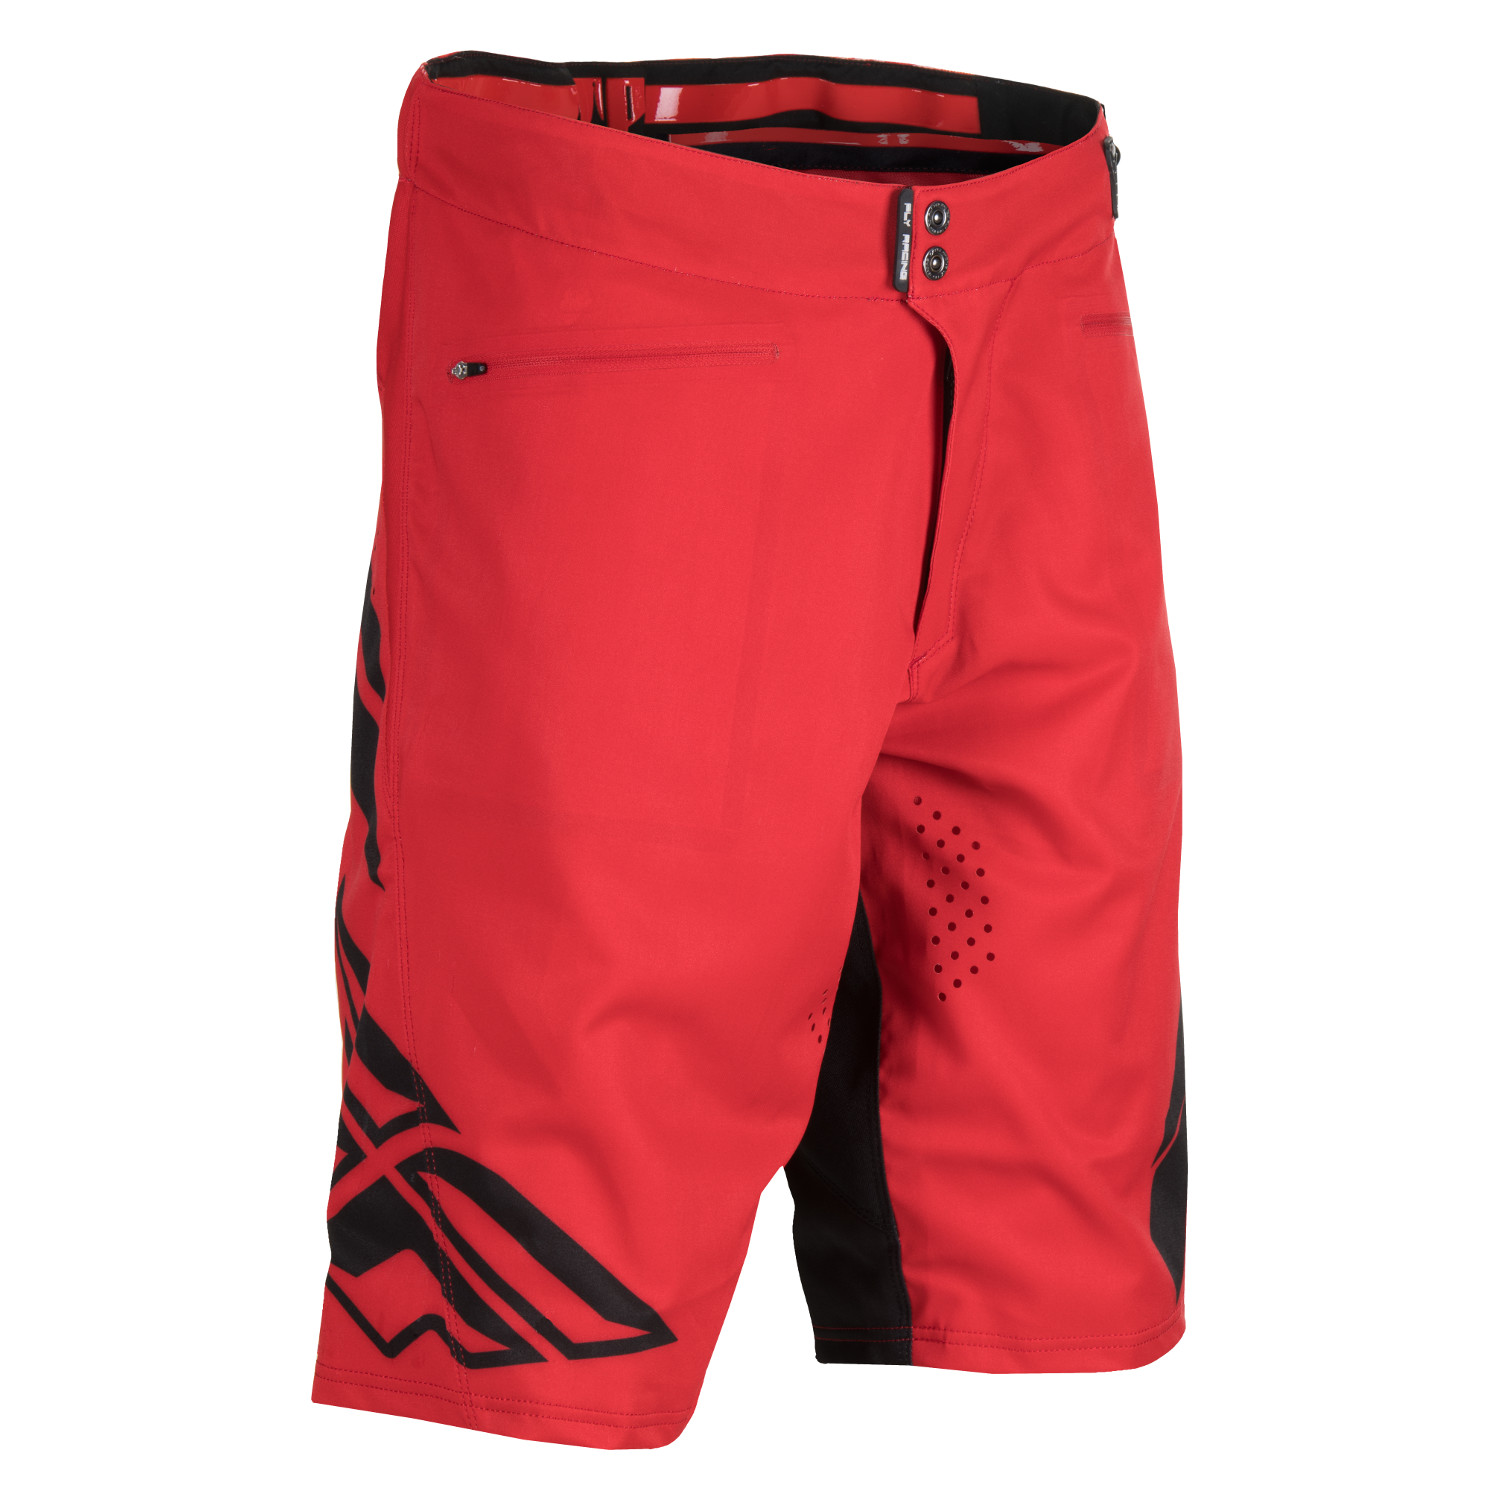 Fly Racing Shorts VTT Radium Shaun Palmer Edition - Red/Black